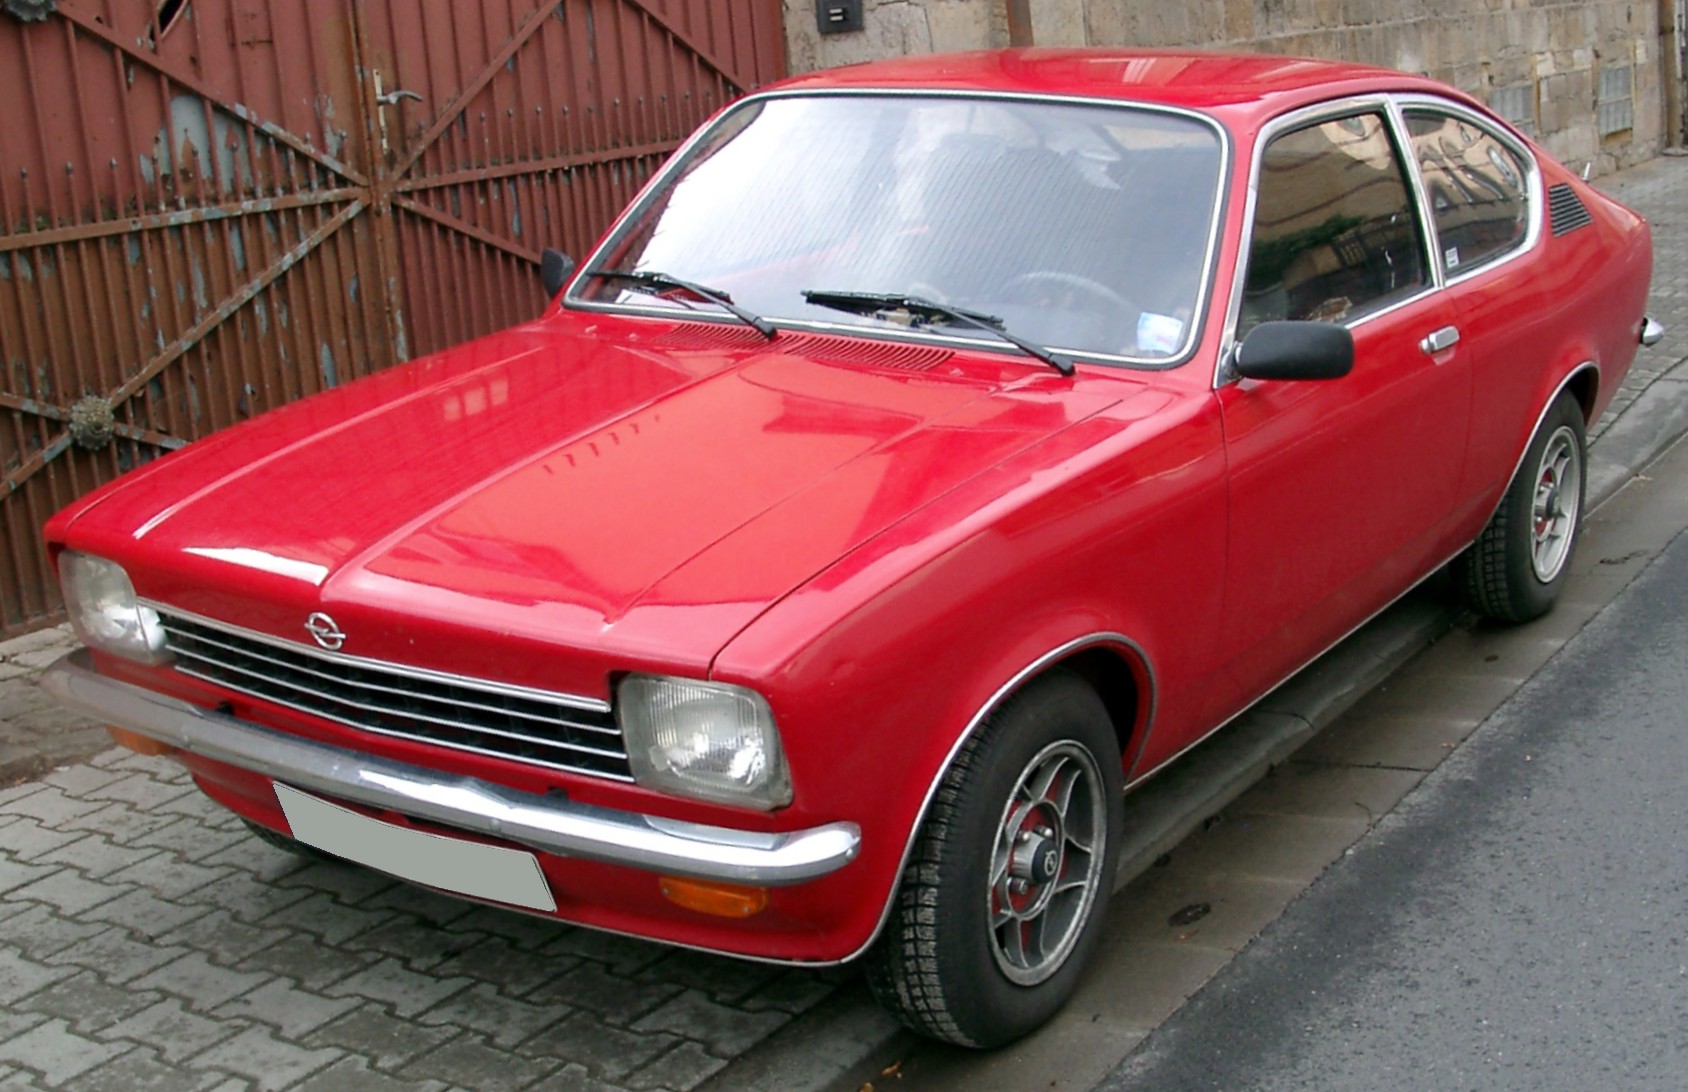 File:Opel Corsa front 20070609.jpg - Wikipedia